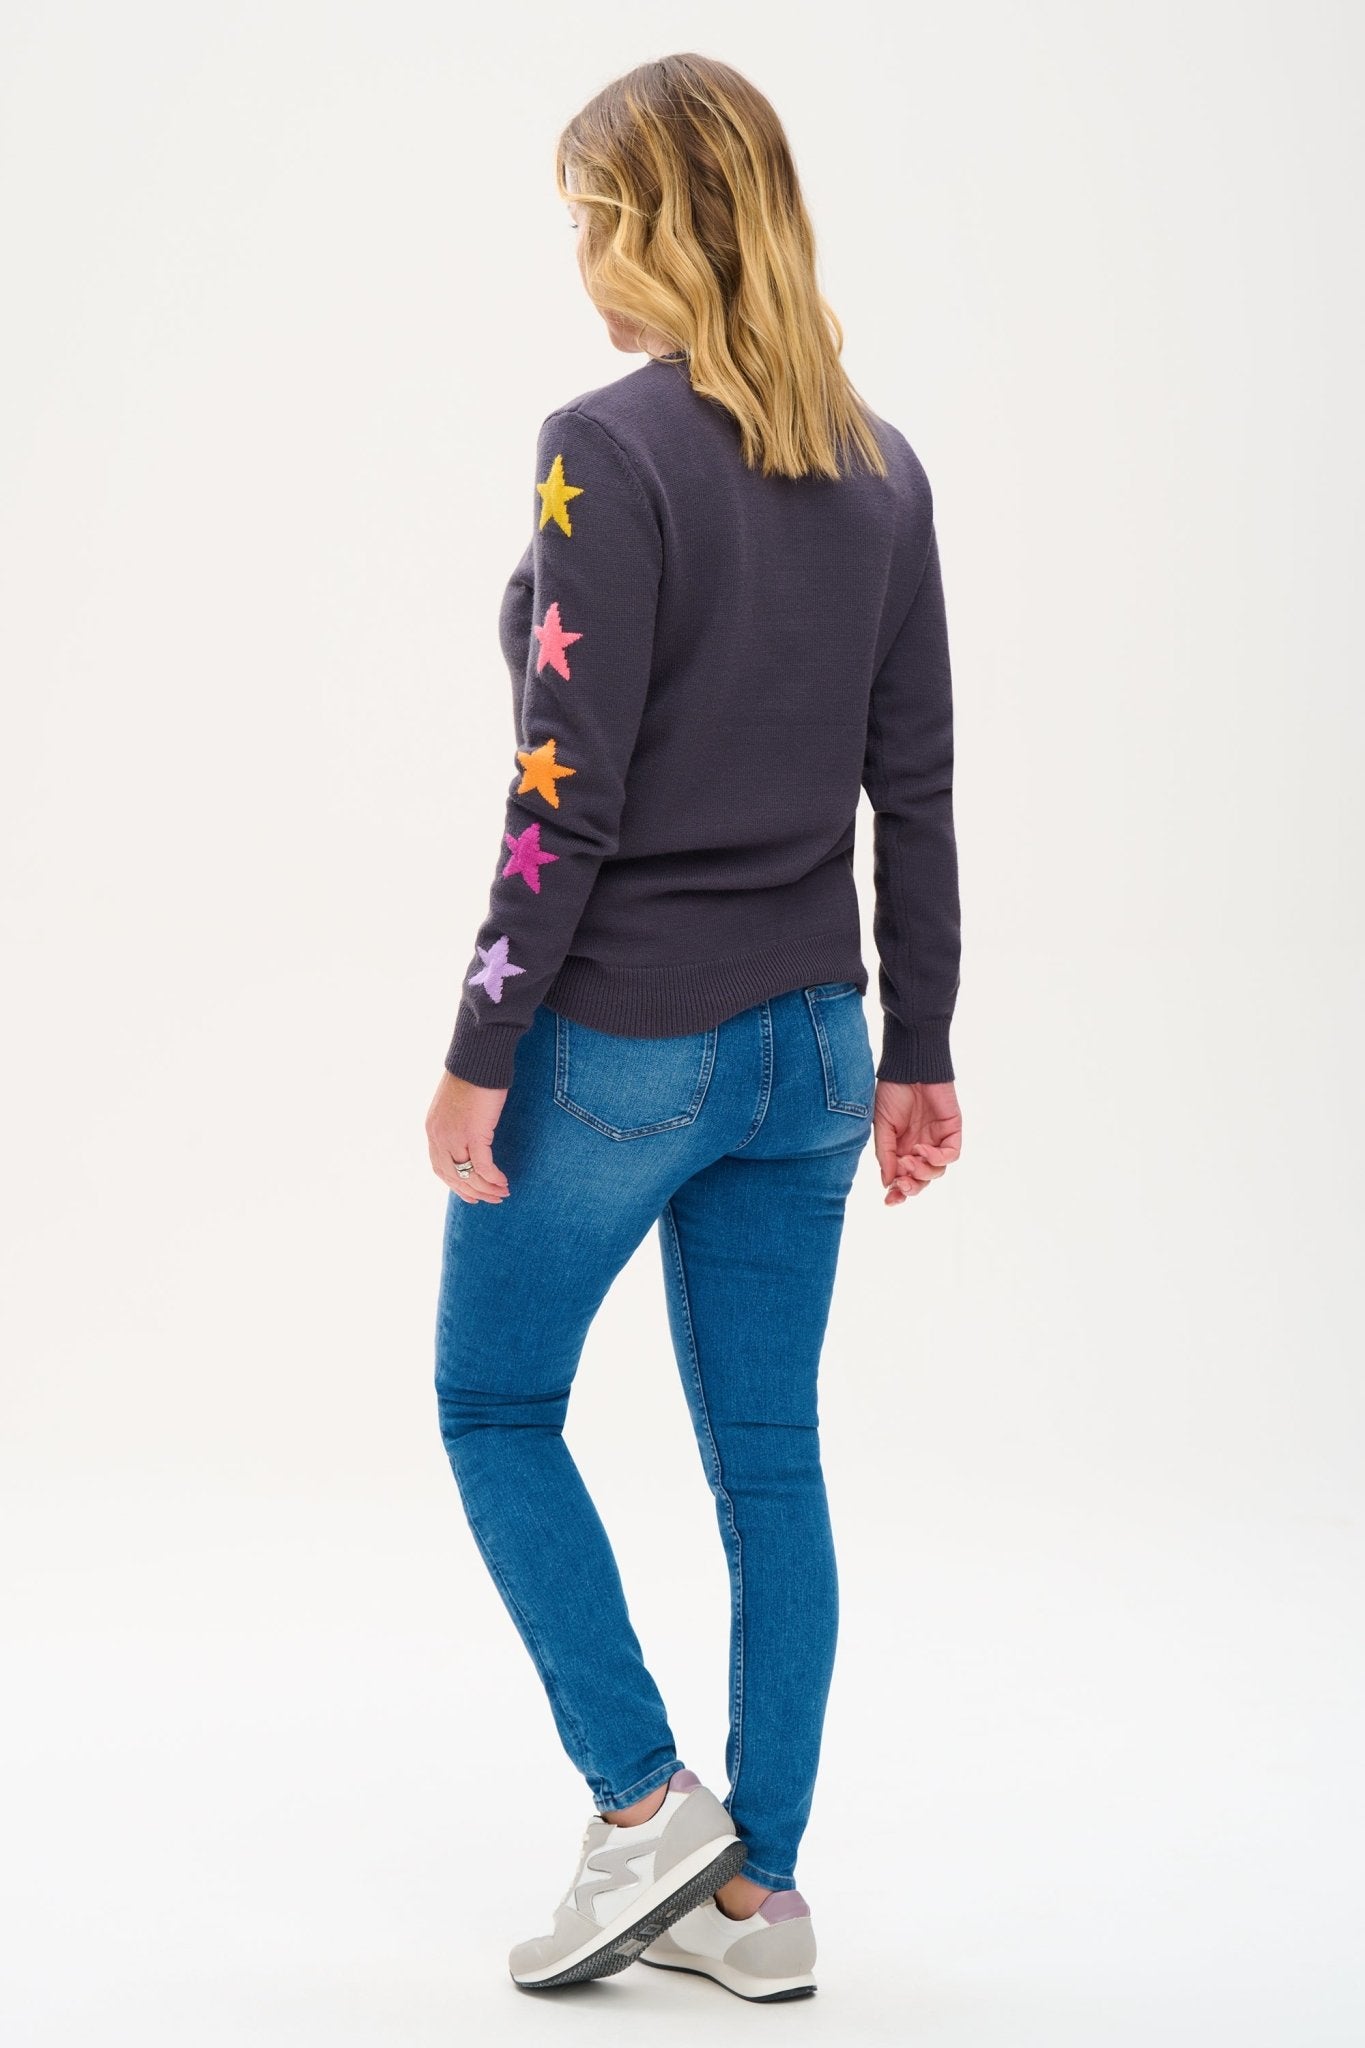 Stacey Jumper - Star Sleeve - Rockamilly-Knitwear-Vintage